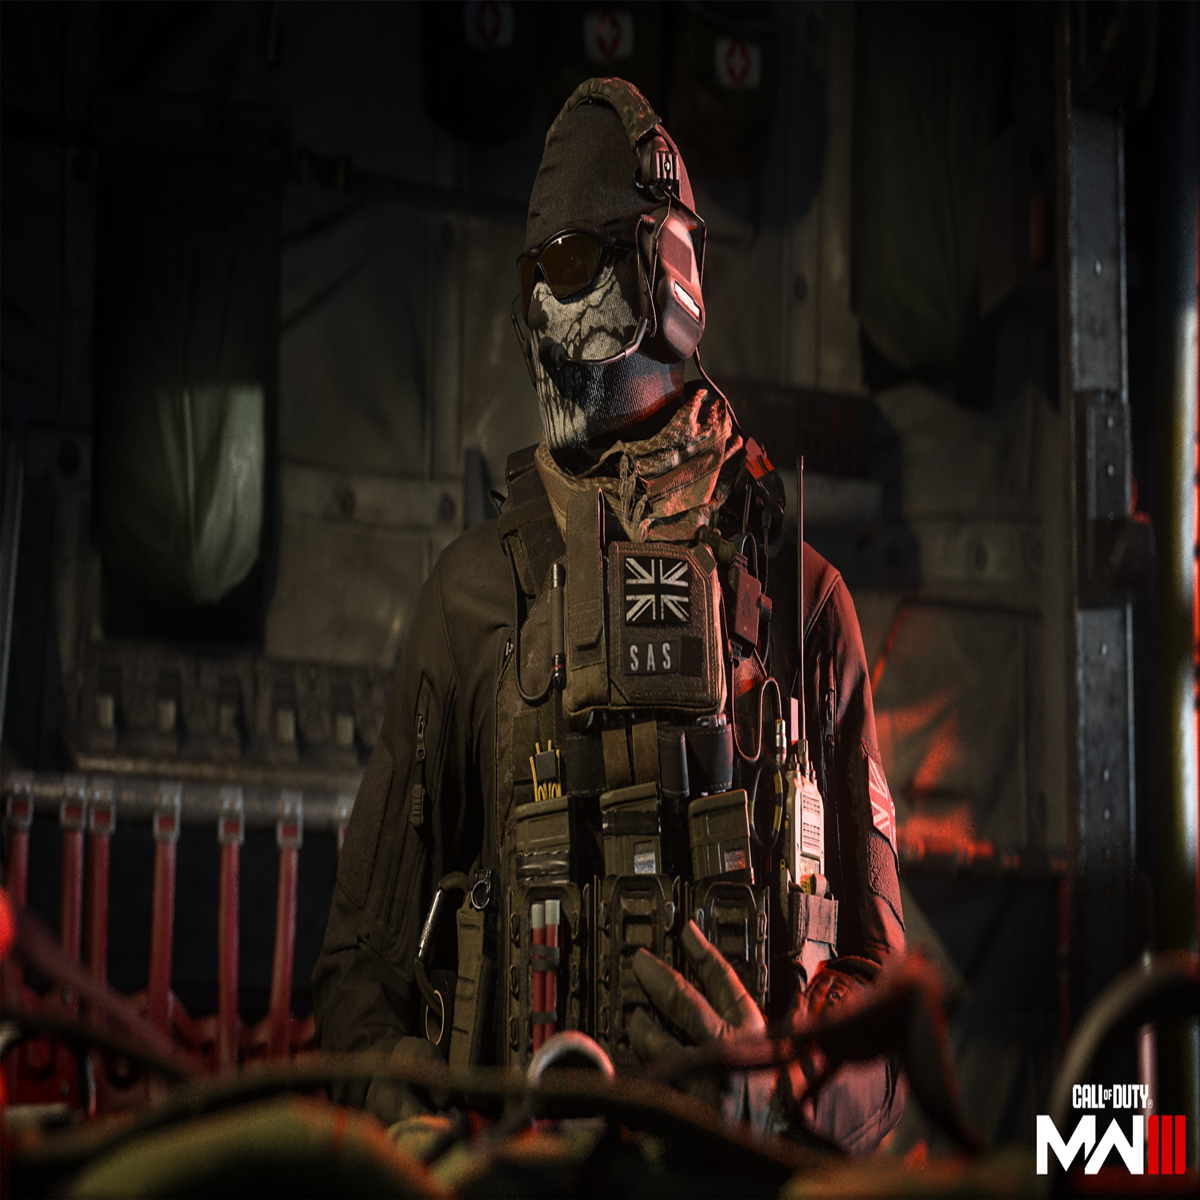 Call of Duty: Modern Warfare III - Campaign Trailer